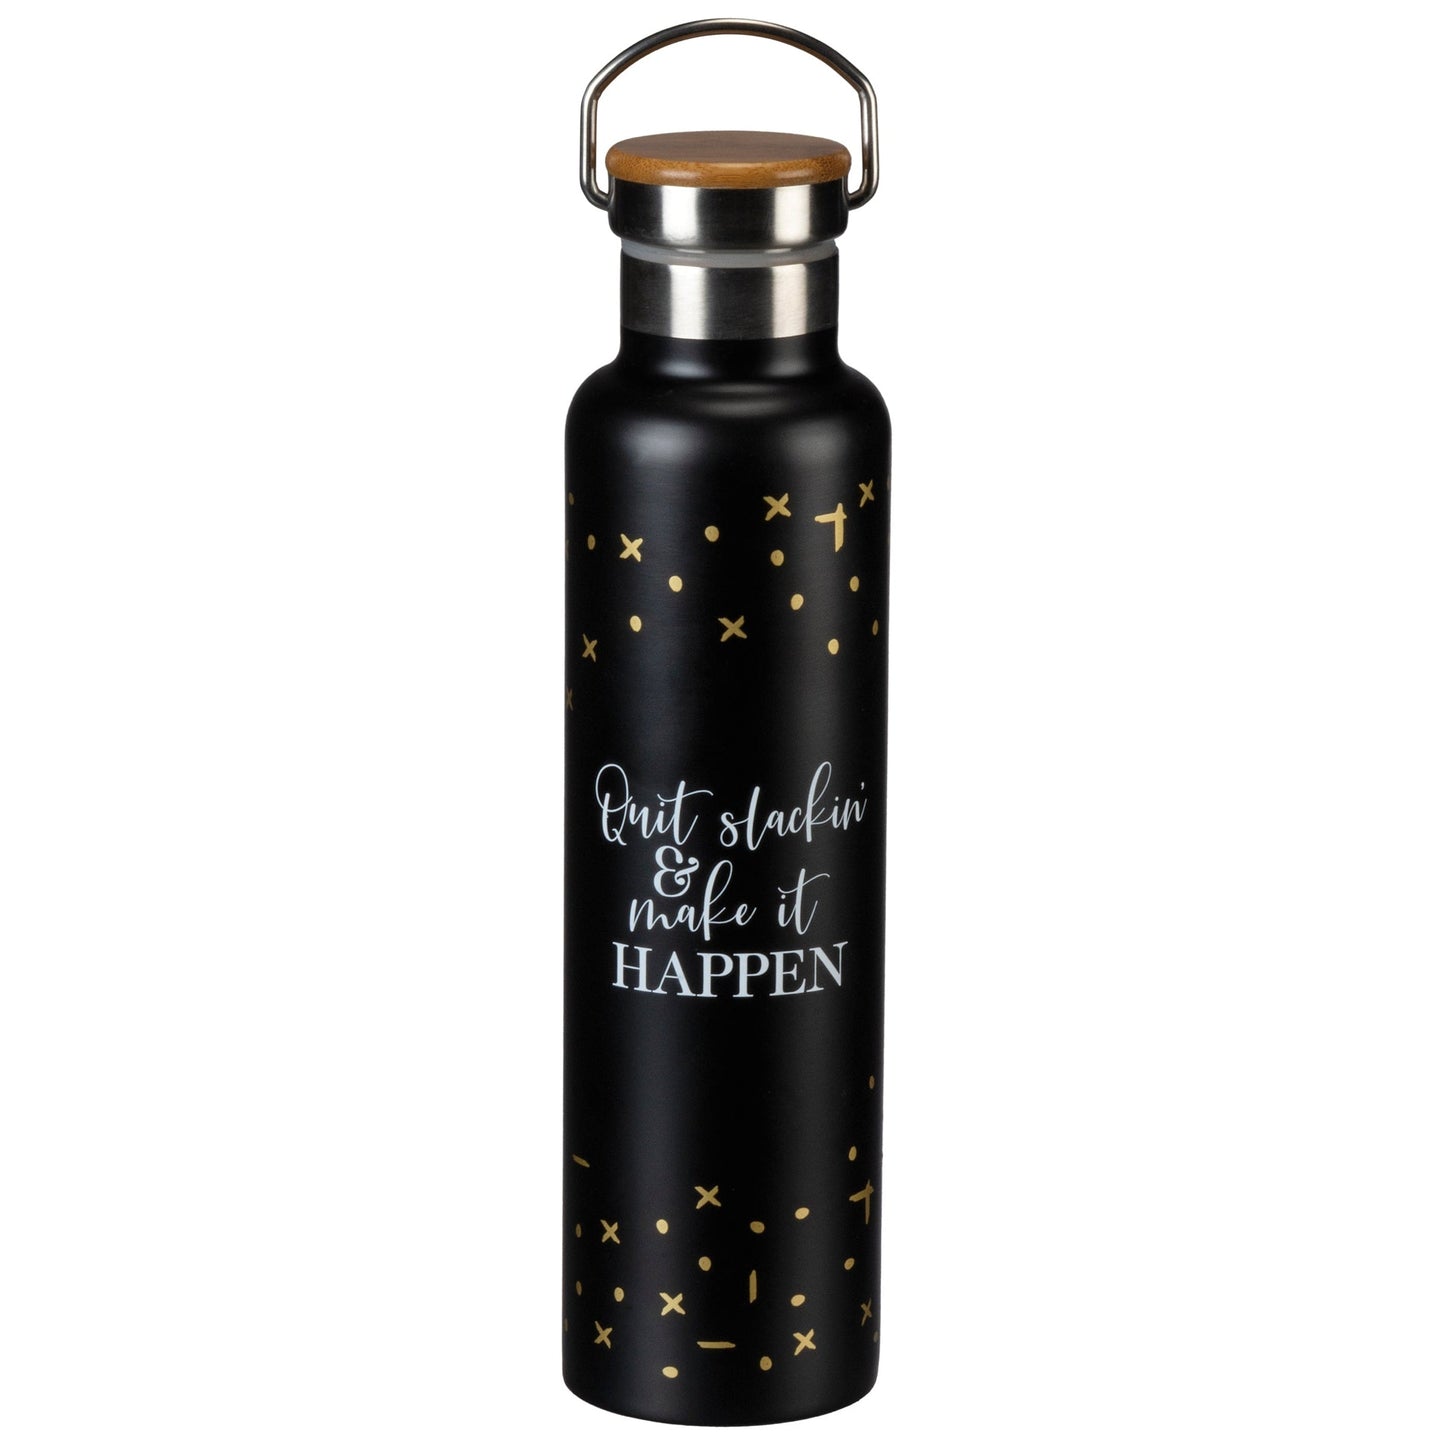 Quit Slackin' & Make It Happen Insulated Water Bottle in Black by The Bullish Store